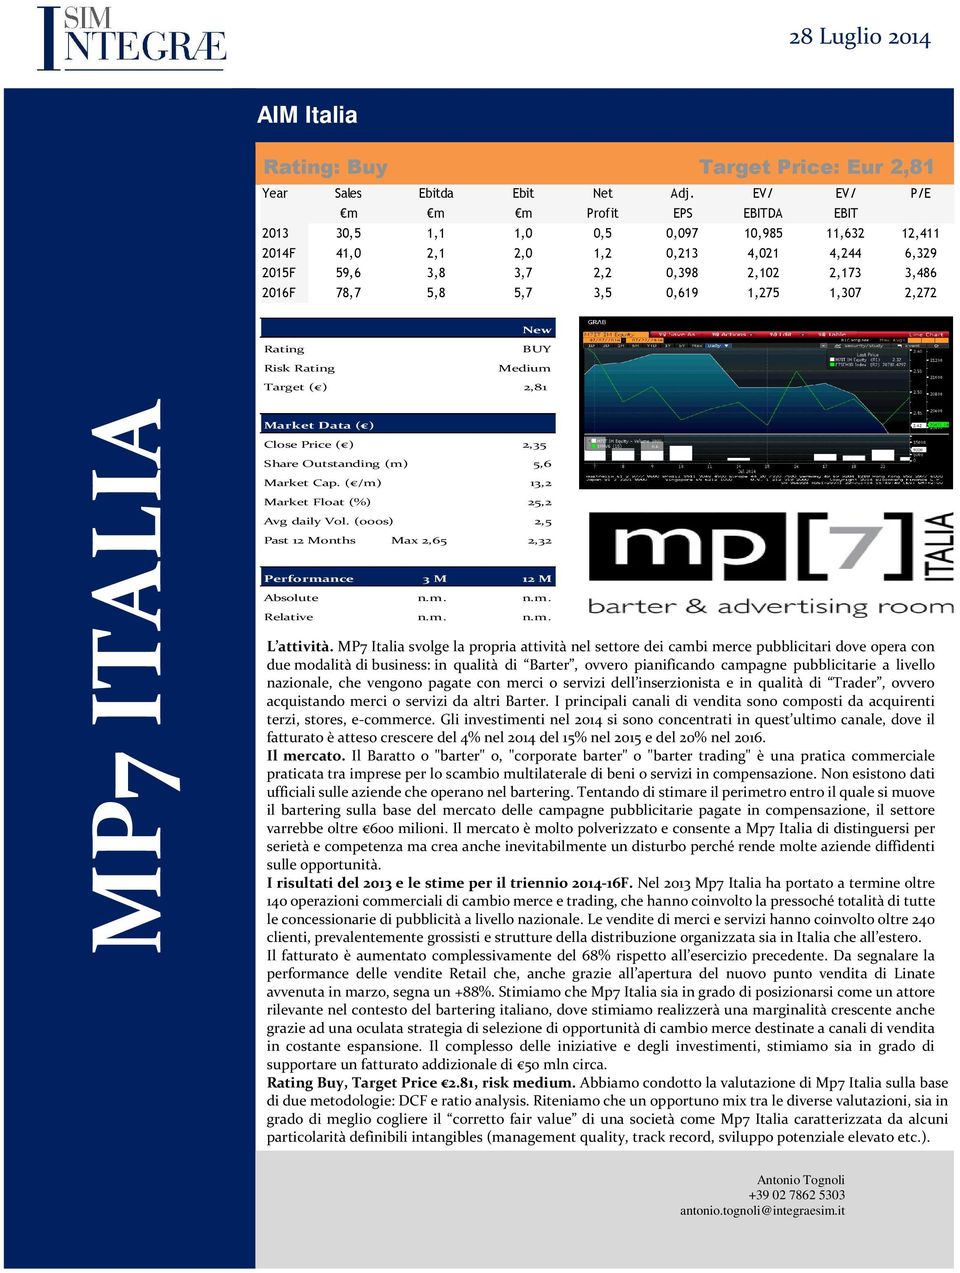 5,7 3,5 0,619 1,275 1,307 2,272 New Rating Risk Rating BUY Medium Target ( ) 2,81 MP7 ITALIA Market Data ( ) Close Price ( ) 2,35 Share Outstanding (m) 5,6 Market Cap.